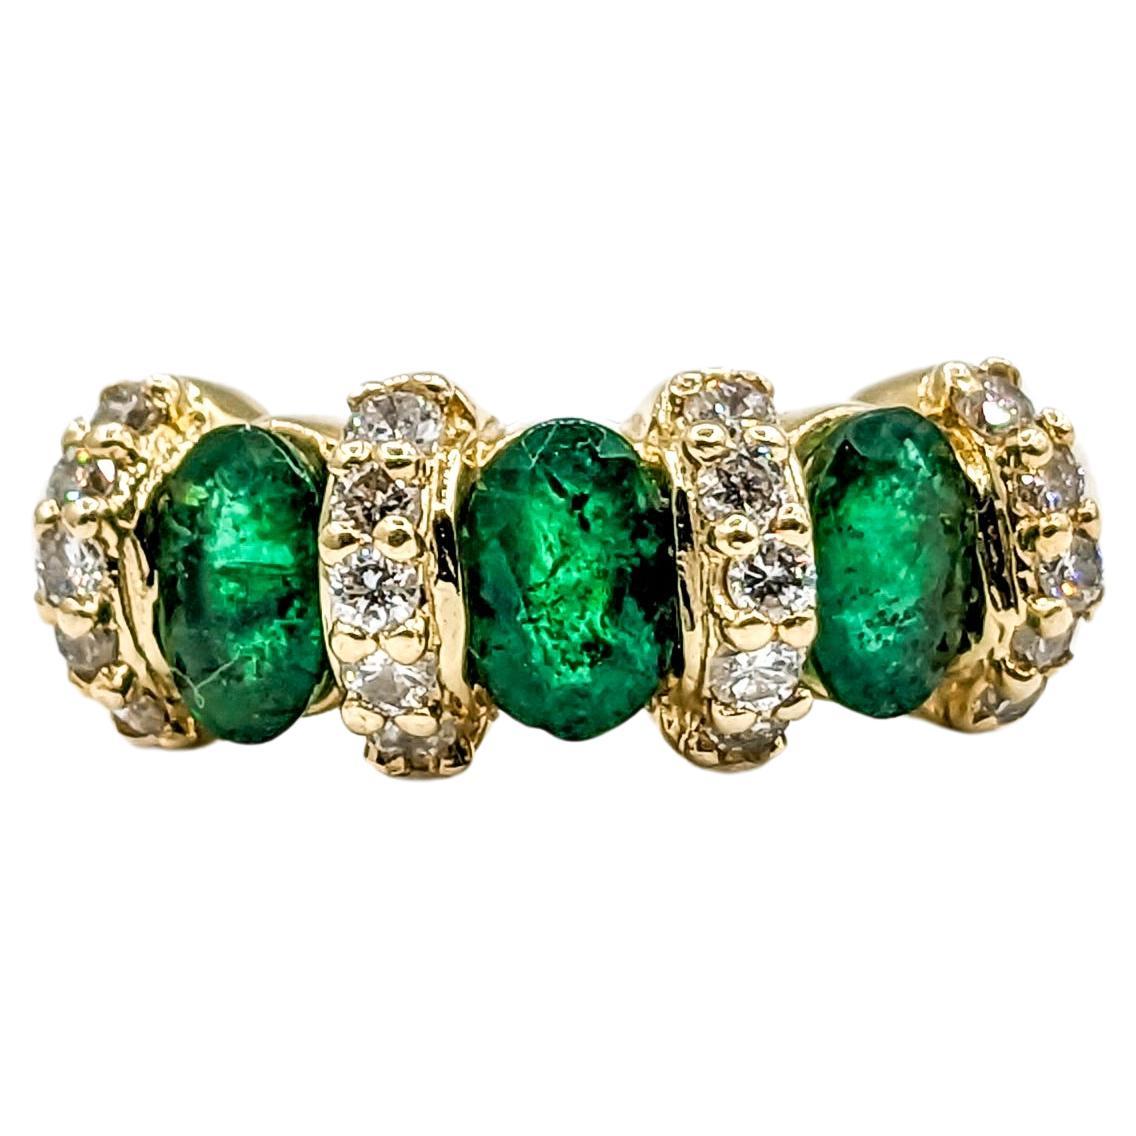 3-Stone Emerald & Diamond Ring in Yellow Gold